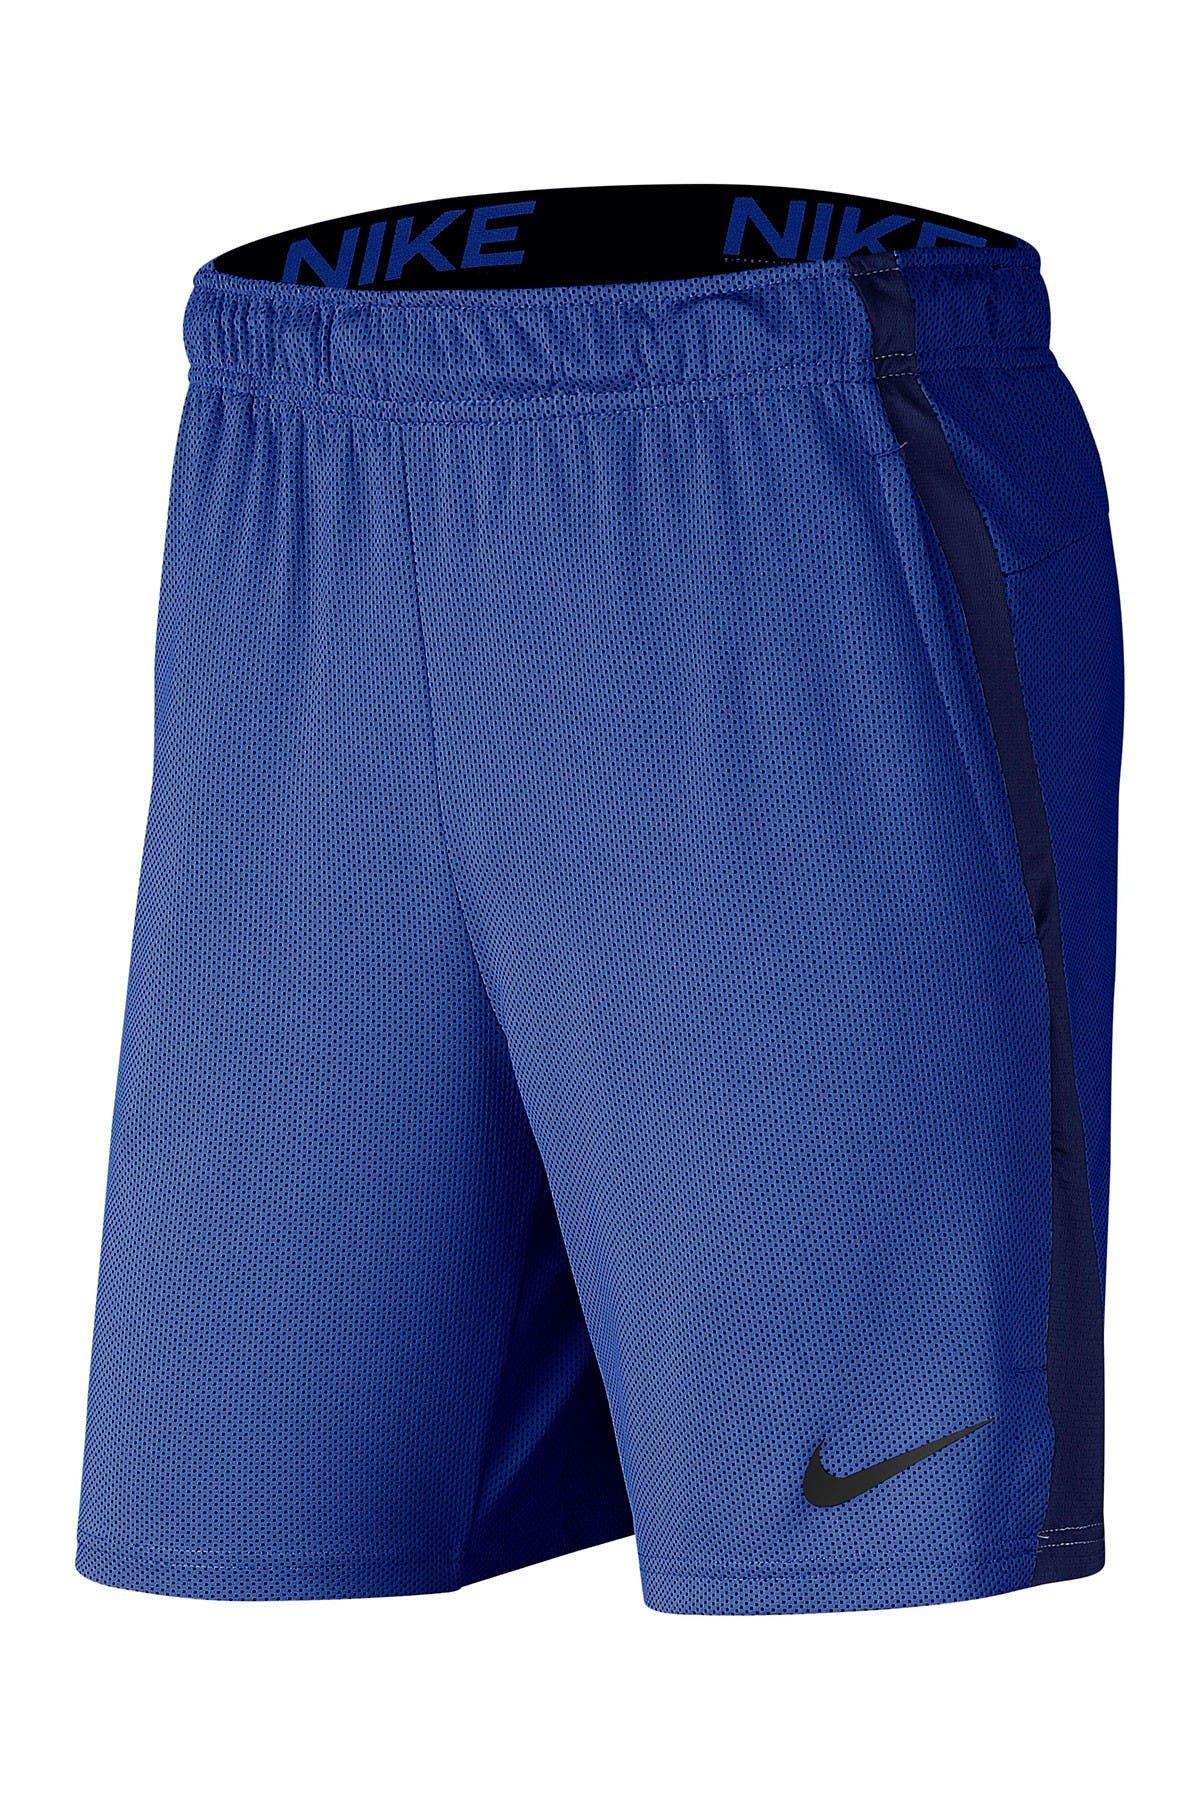 Nike | Hybrid 2.0 Mesh Training Shorts 